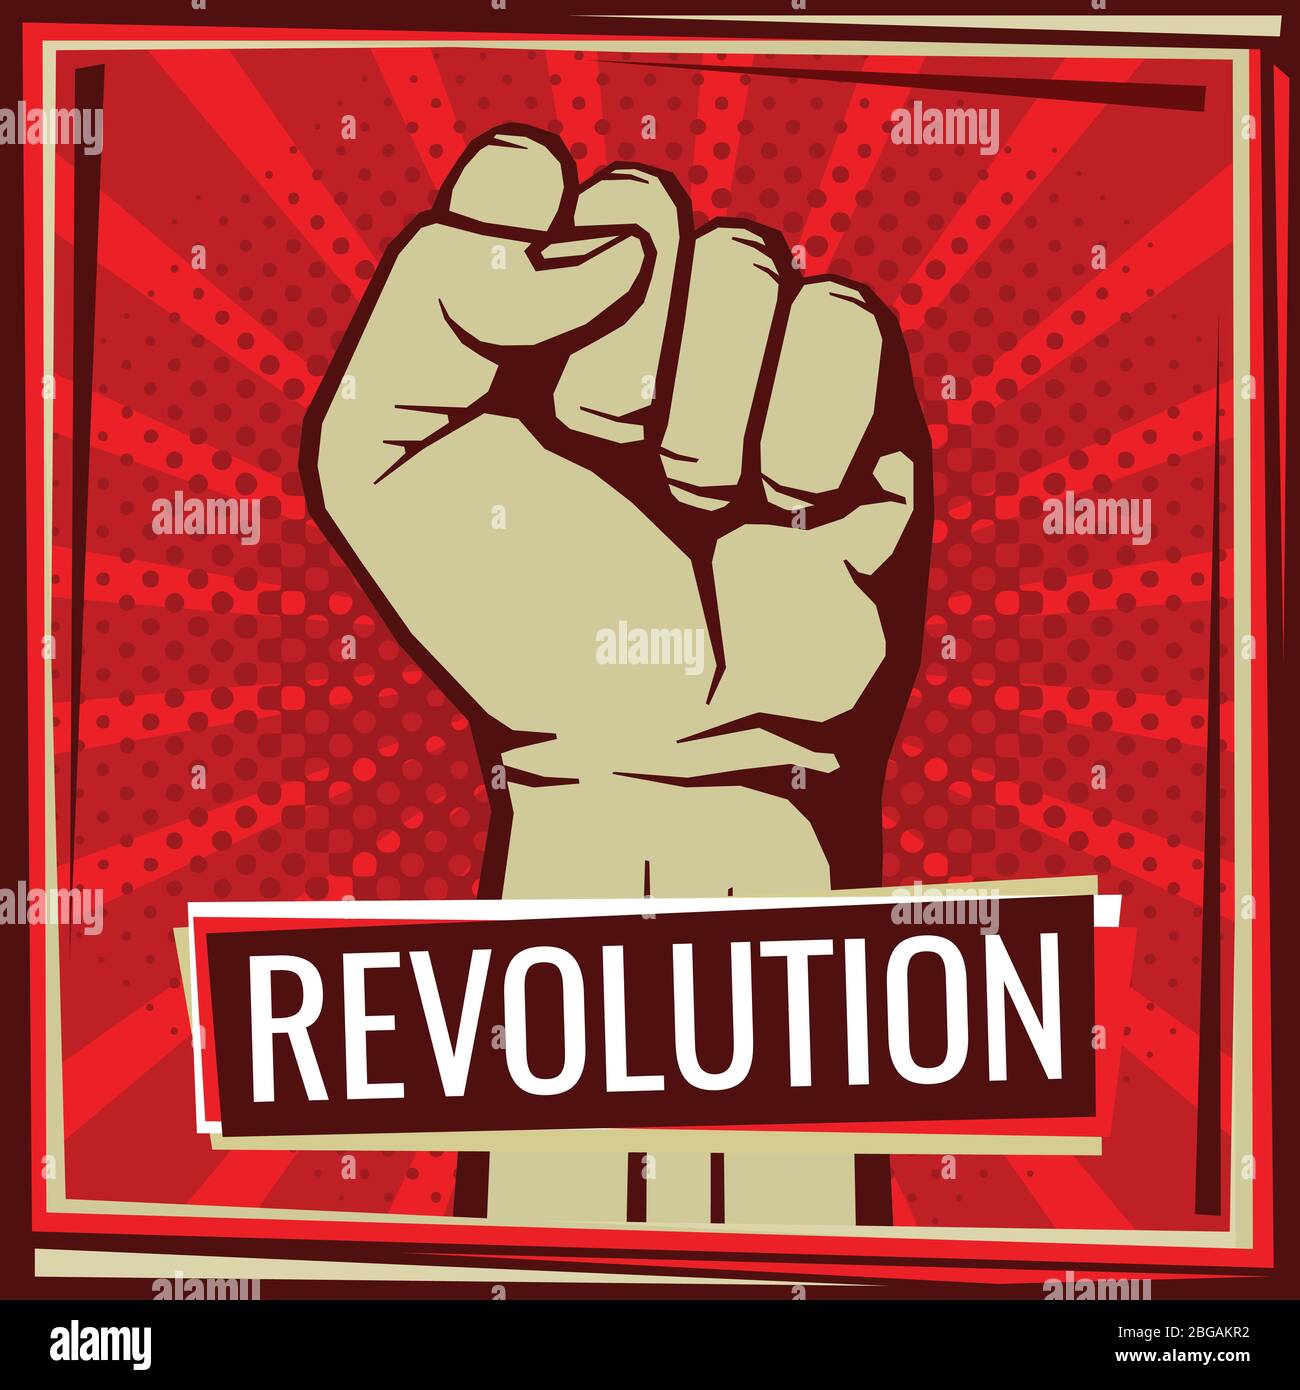 Revolution Kampf Vektor Poster mit Arbeiter Hand Faust angehoben. Illustration der Faust Arbeiter, Rebellen und Protestrevolution Stock Vektor